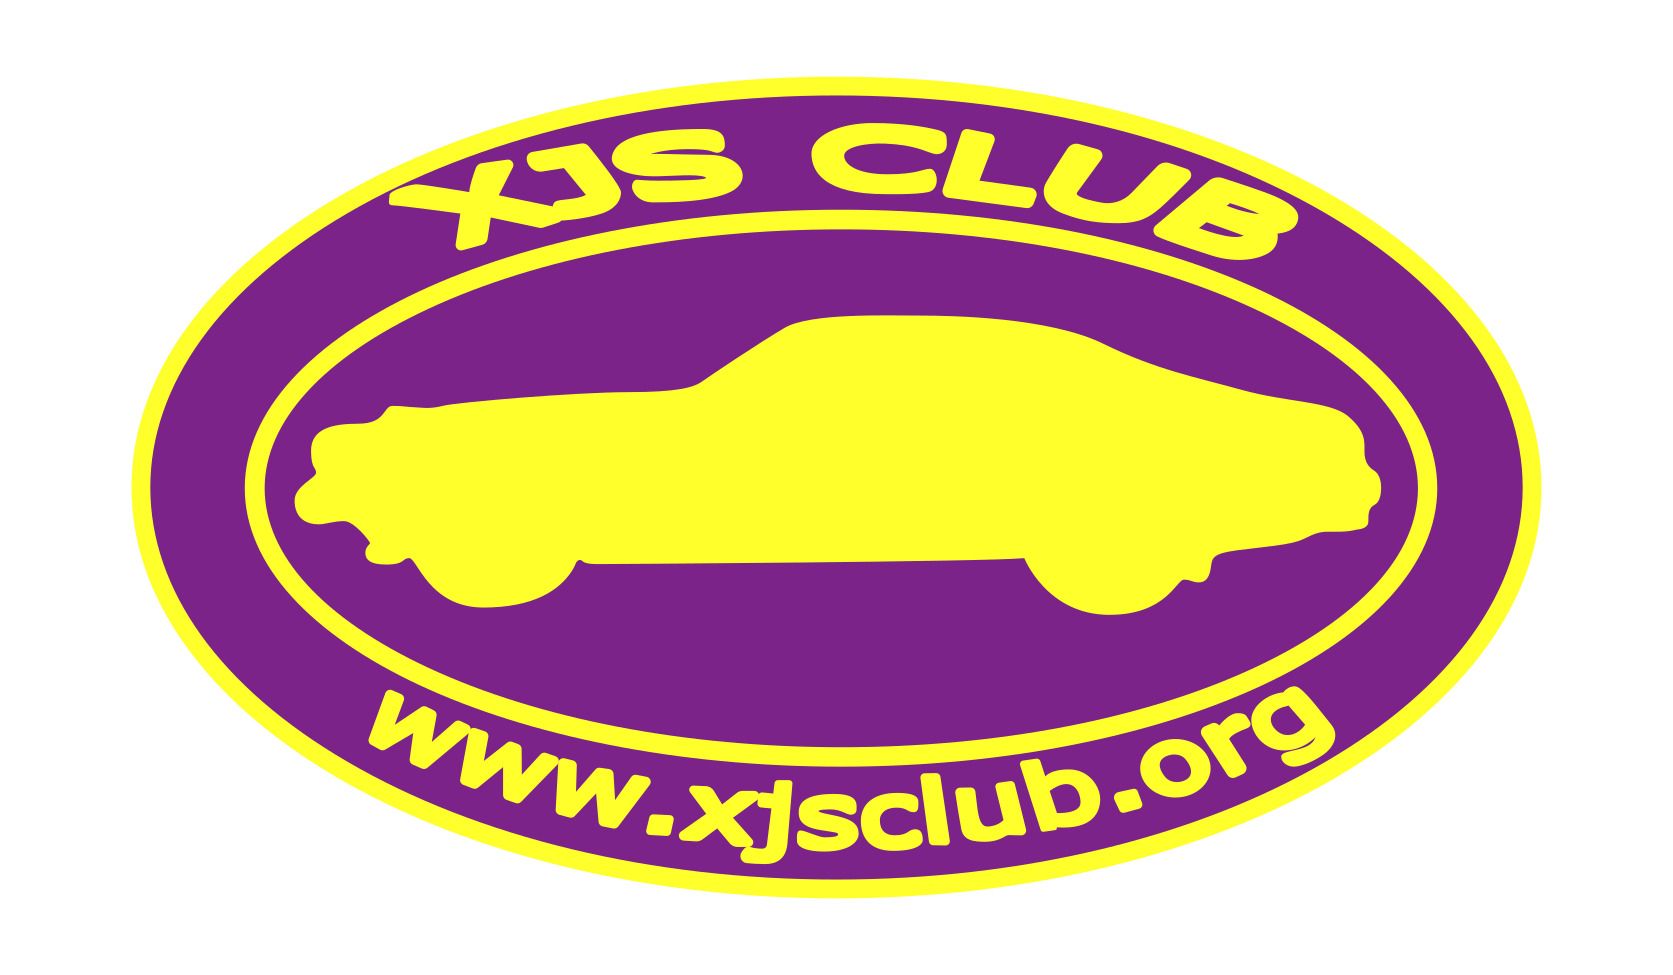 Jaguar XJS Club